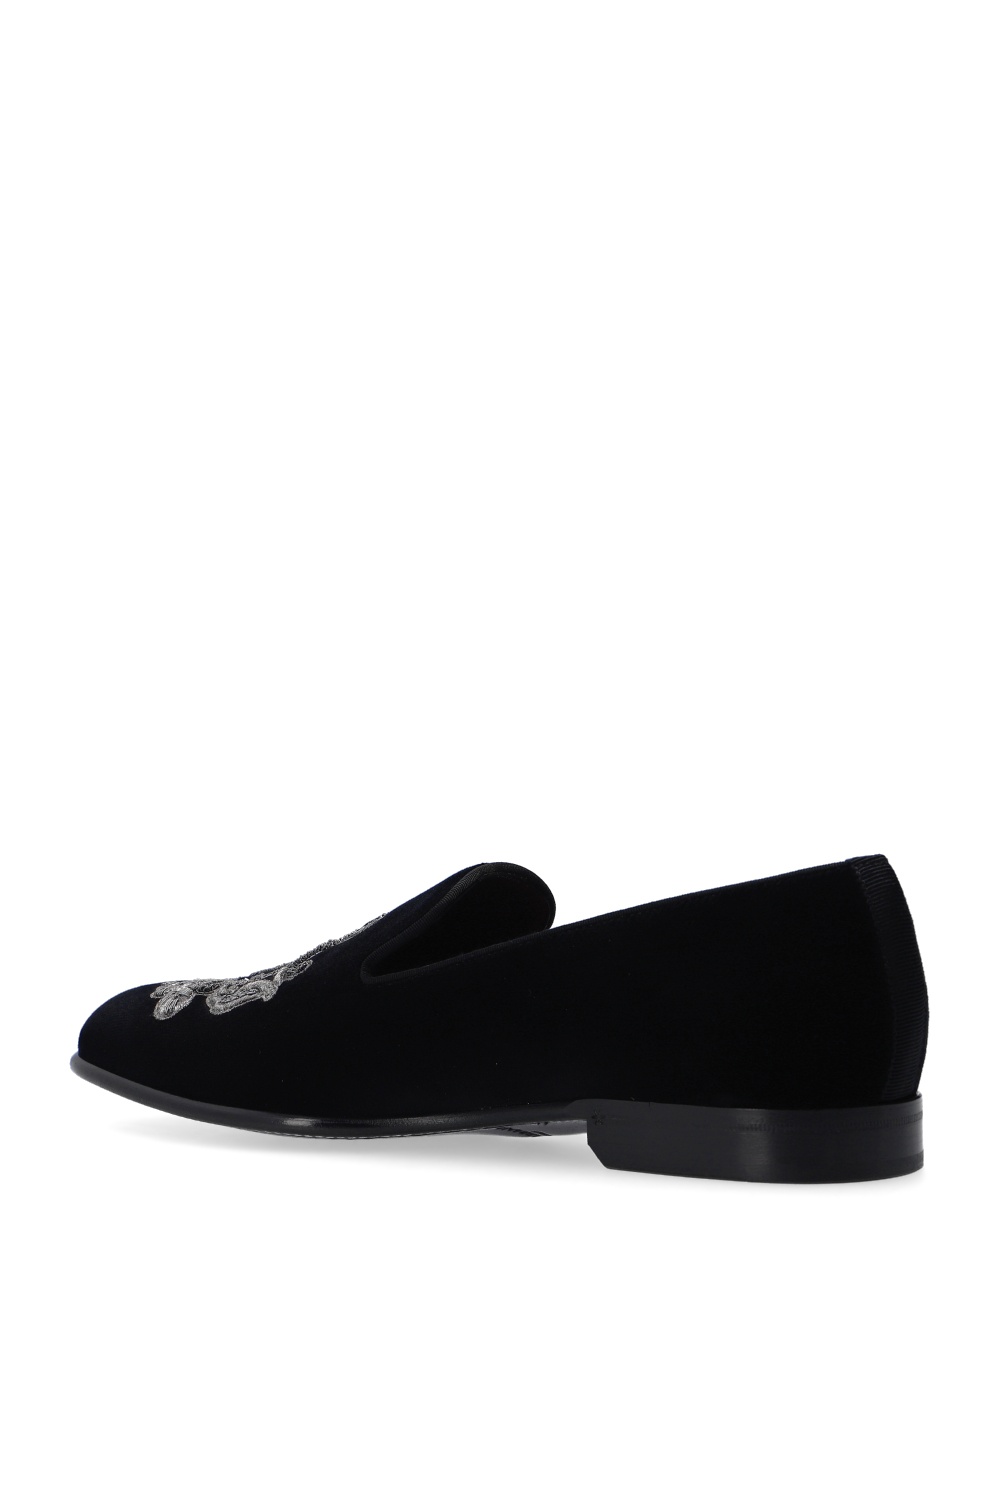 dolce & gabbana black logo jeans ‘Leonardo’ loafers